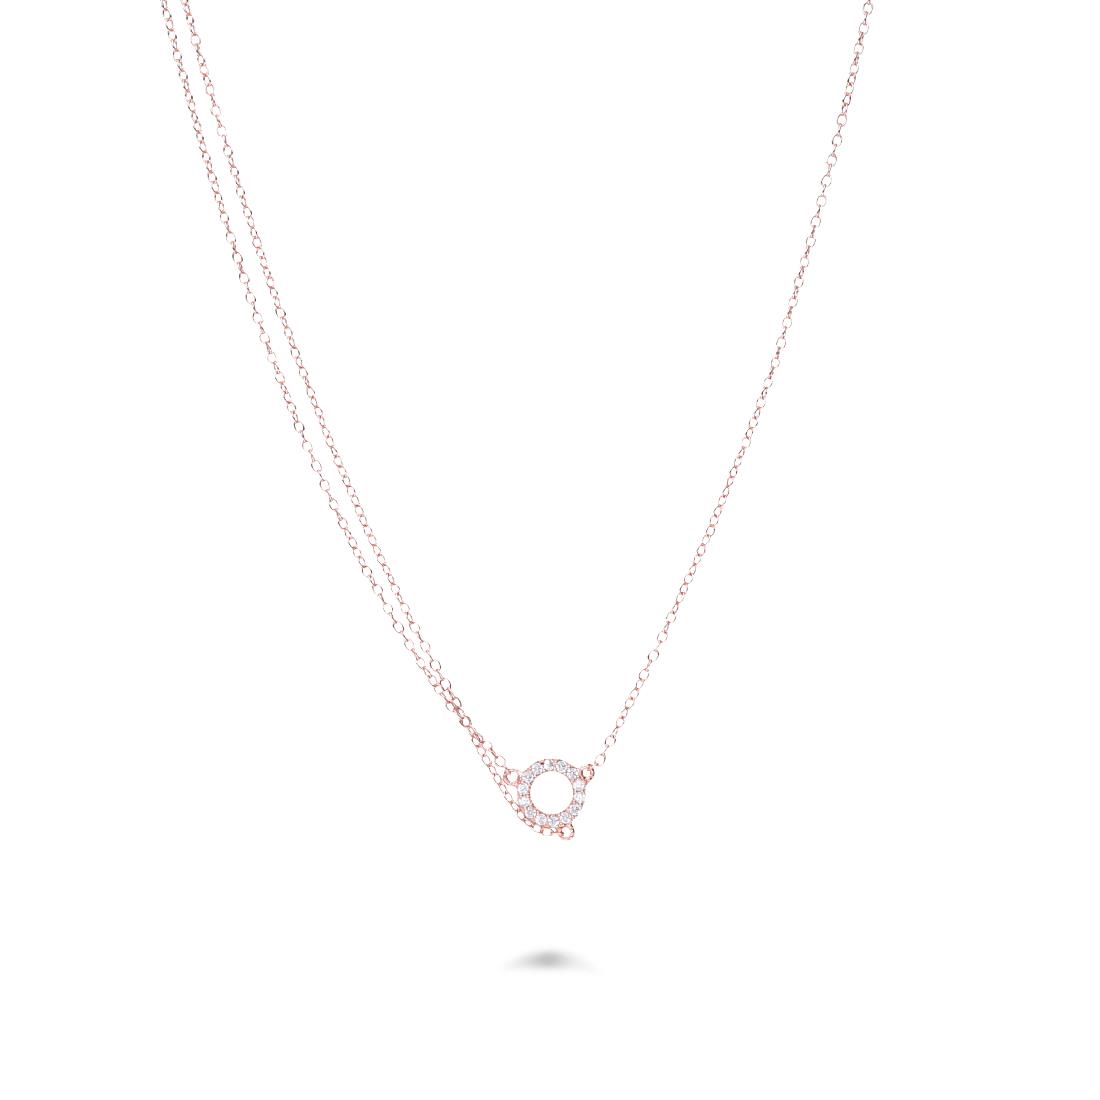 Collana argento rosato pendente a cerchio concentrico - ORO&CO 925